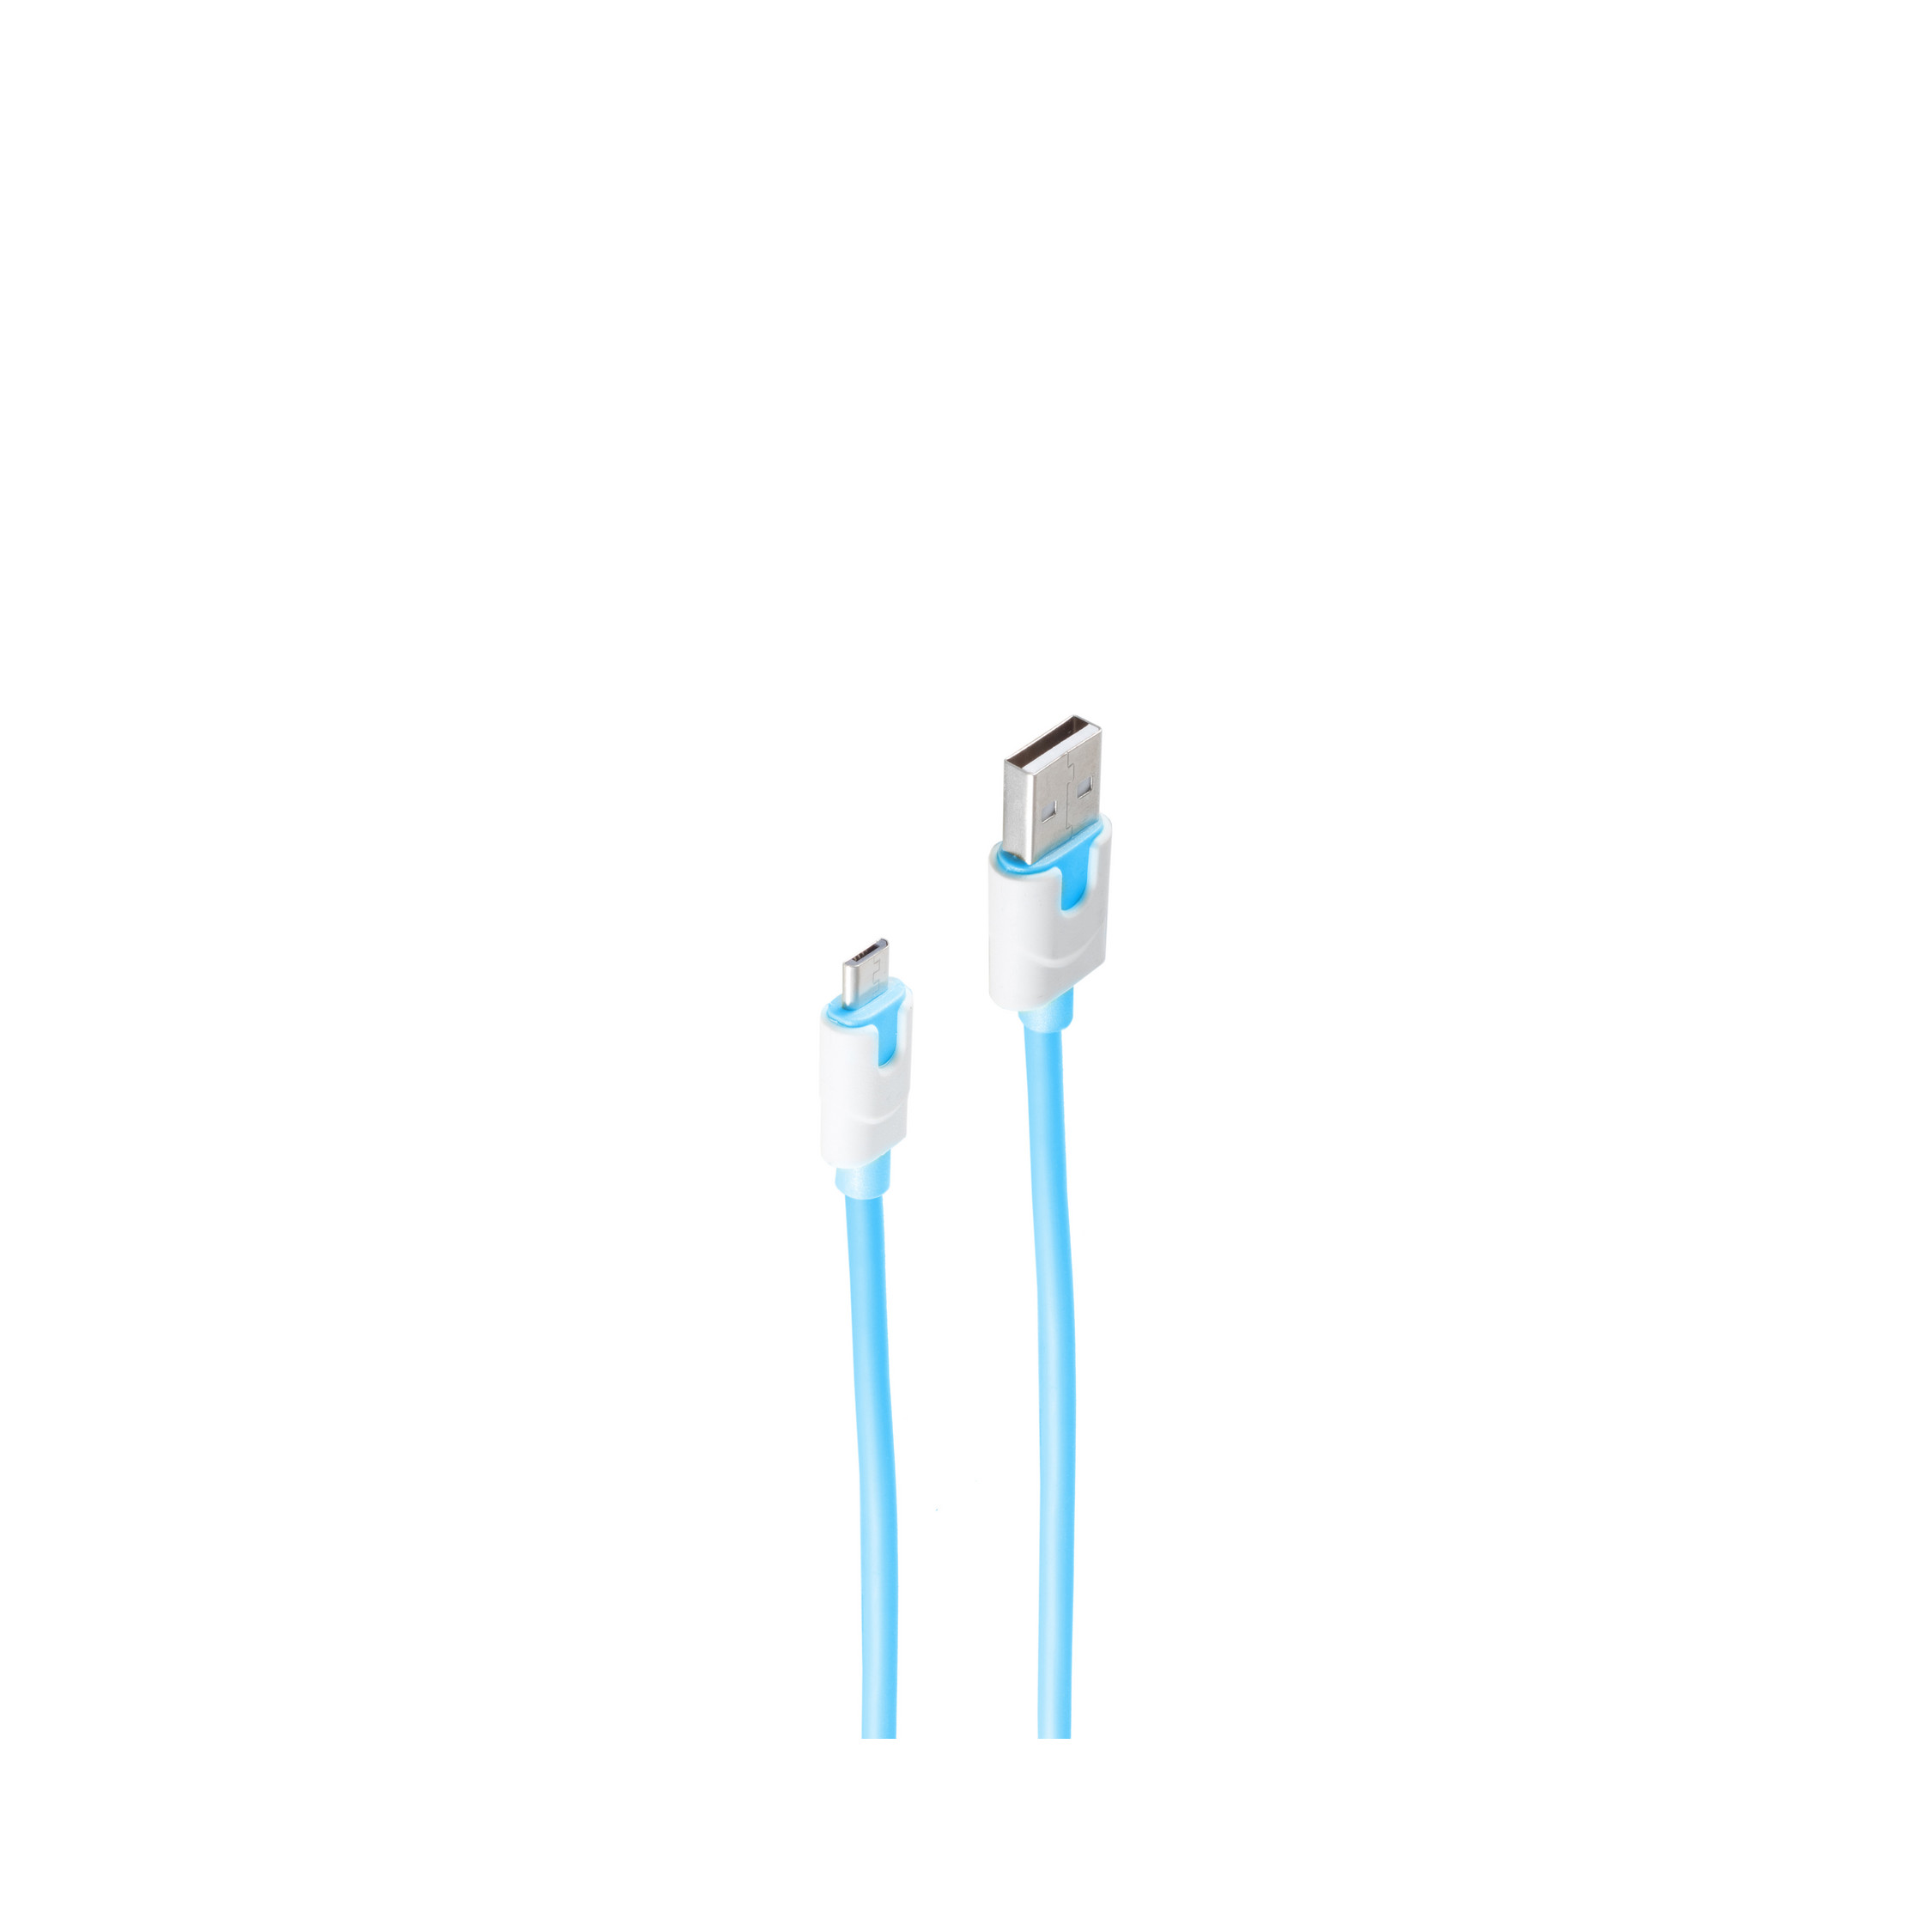 A USB m, blau SHIVERPEAKS B, Stecker Ladekabel, Micro 0,3 auf 0,3m, blau, USB-Ladekabel